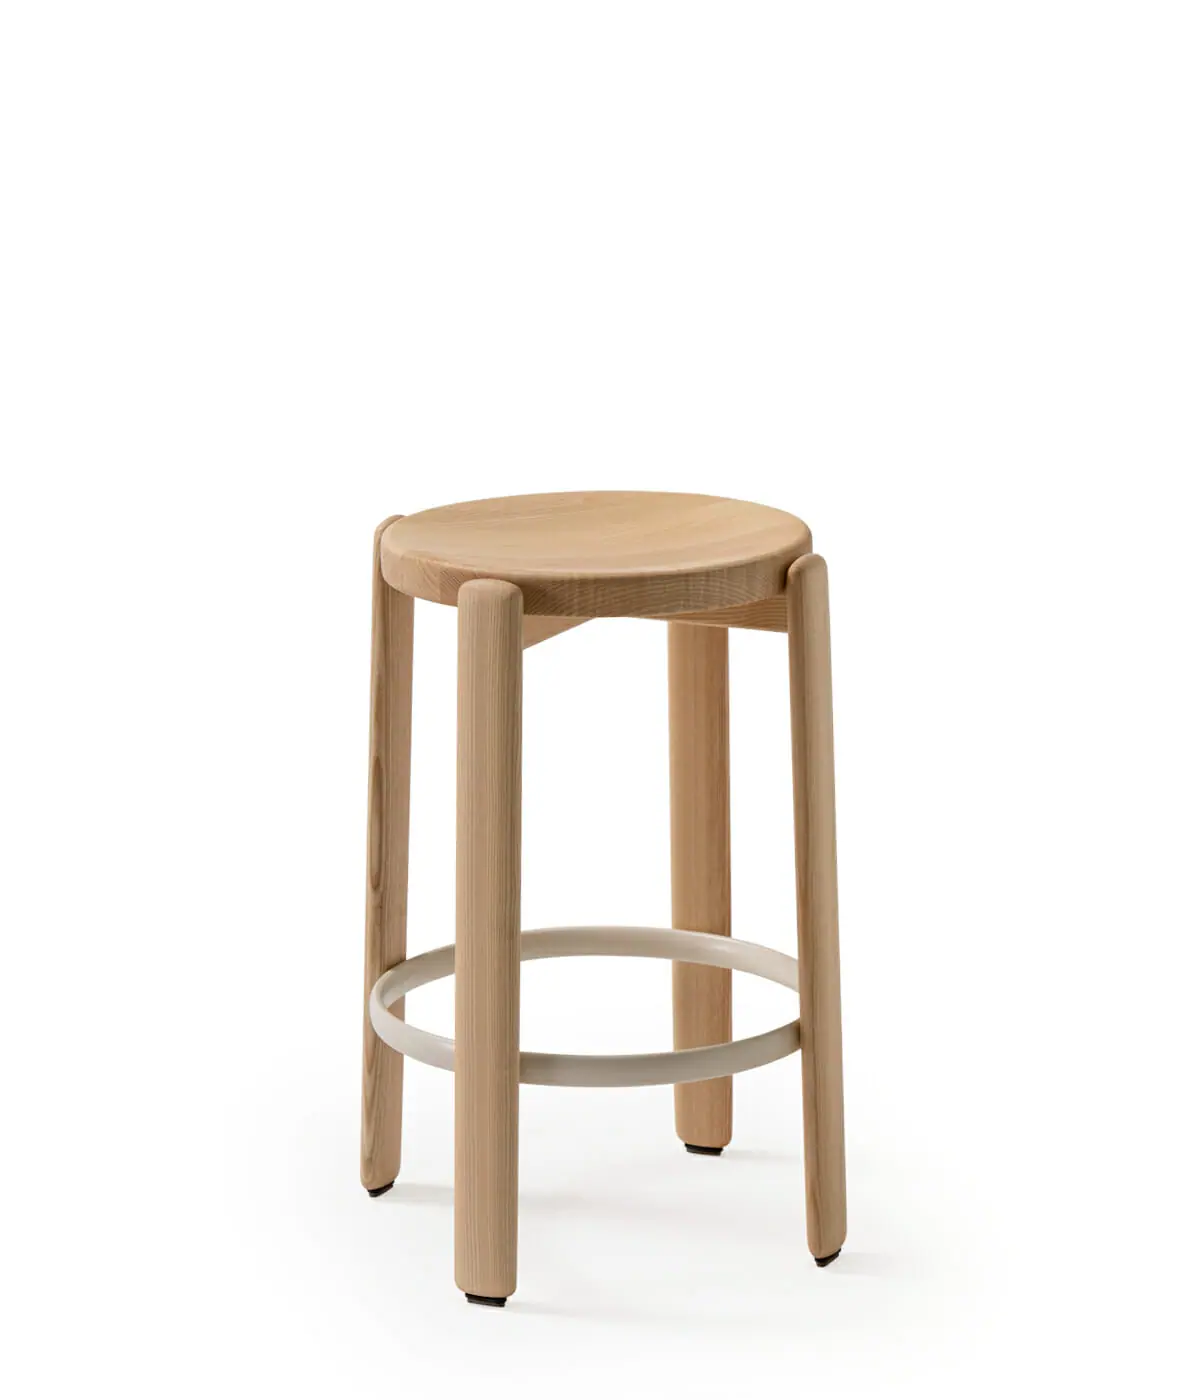 83909-83904-tura-chair-stools